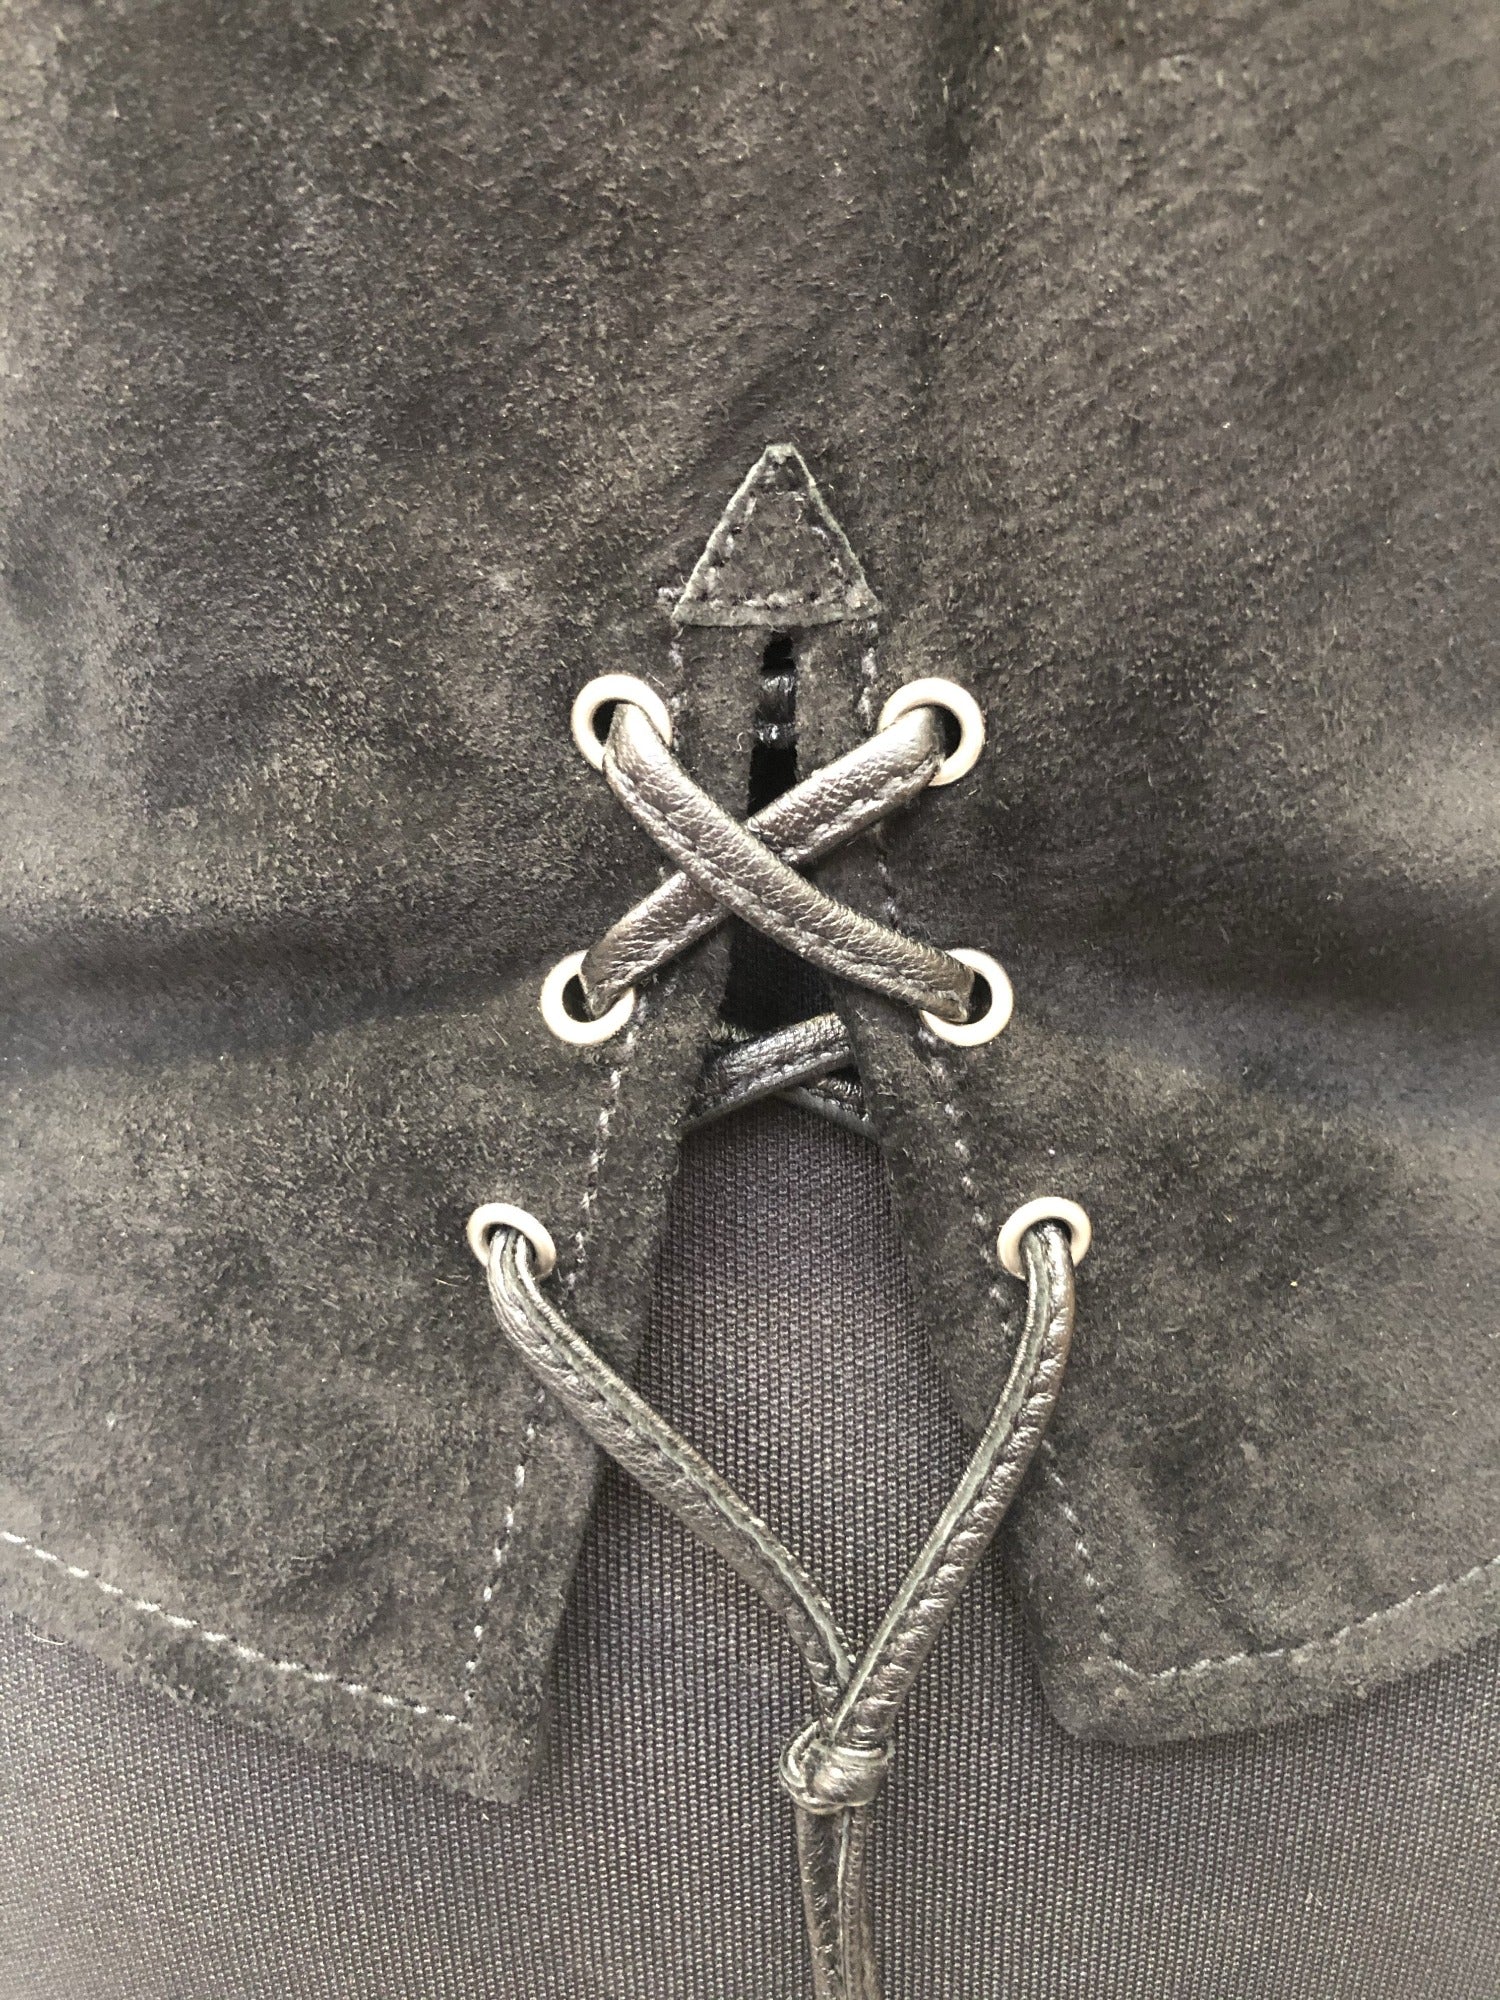 YKK Zip  waistcoat  top  tee  t-shirt  suede fringing  suede  stud detail  womens  Logo design  logo  leather  Jack Daniels  Black